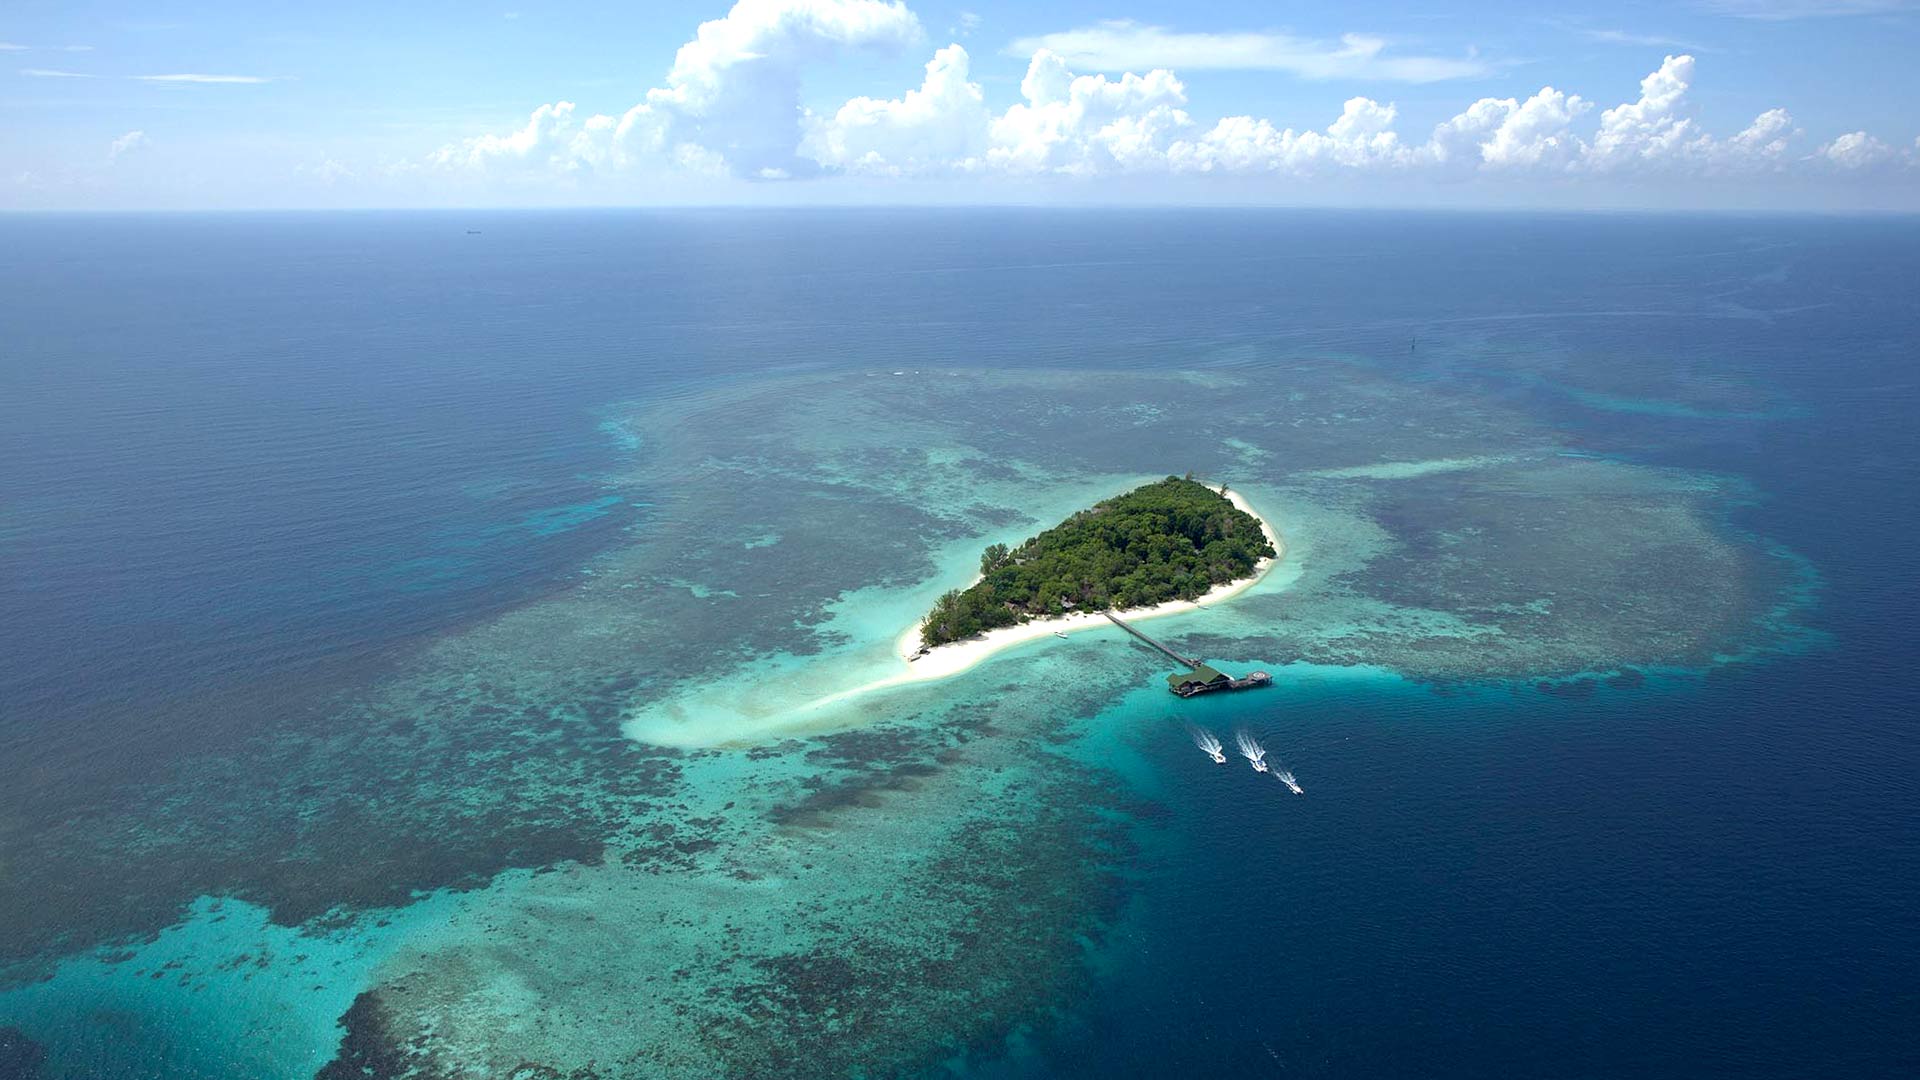 Lankayan island